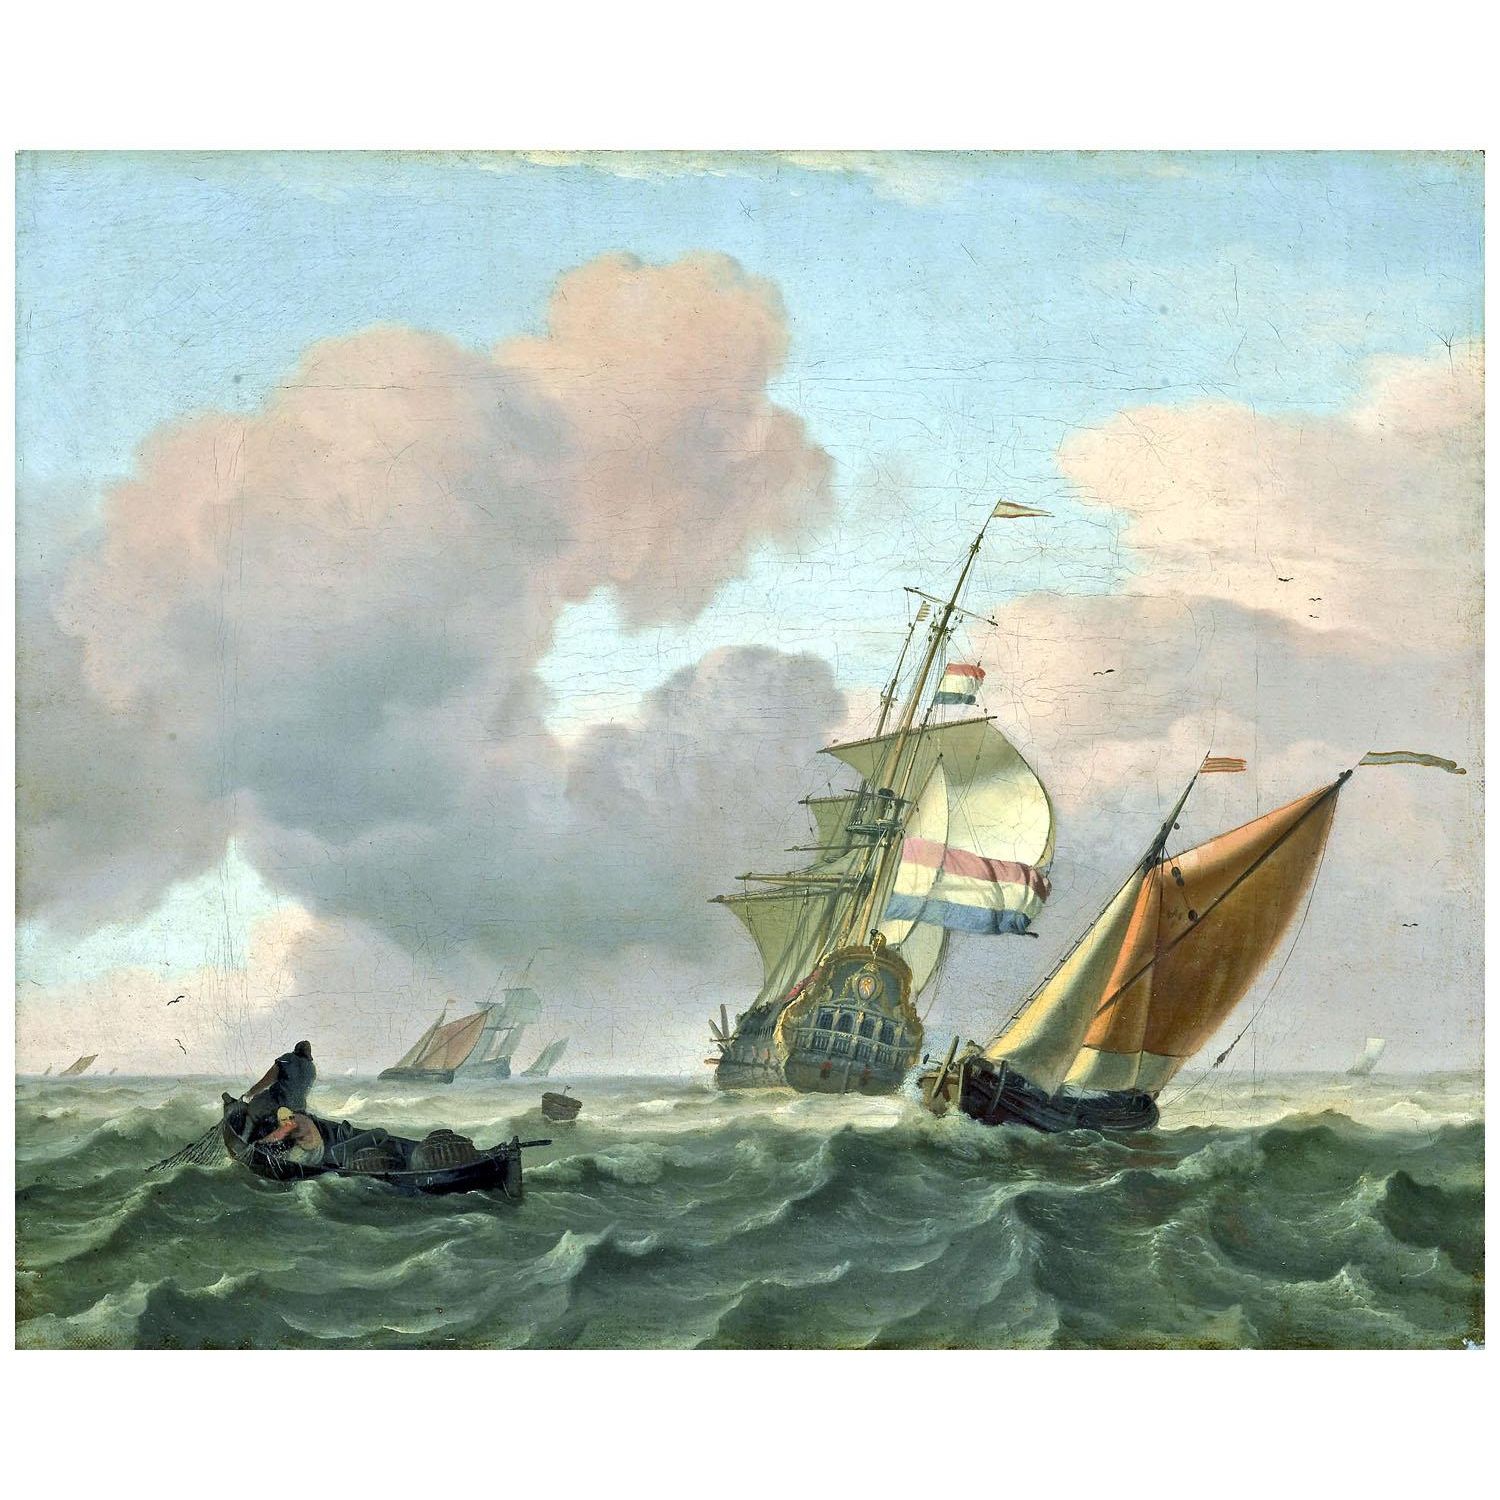 Ludolf Backhuysen. Turbulent Sea with Ships. 1697. Rijksmuseum Amsterdam